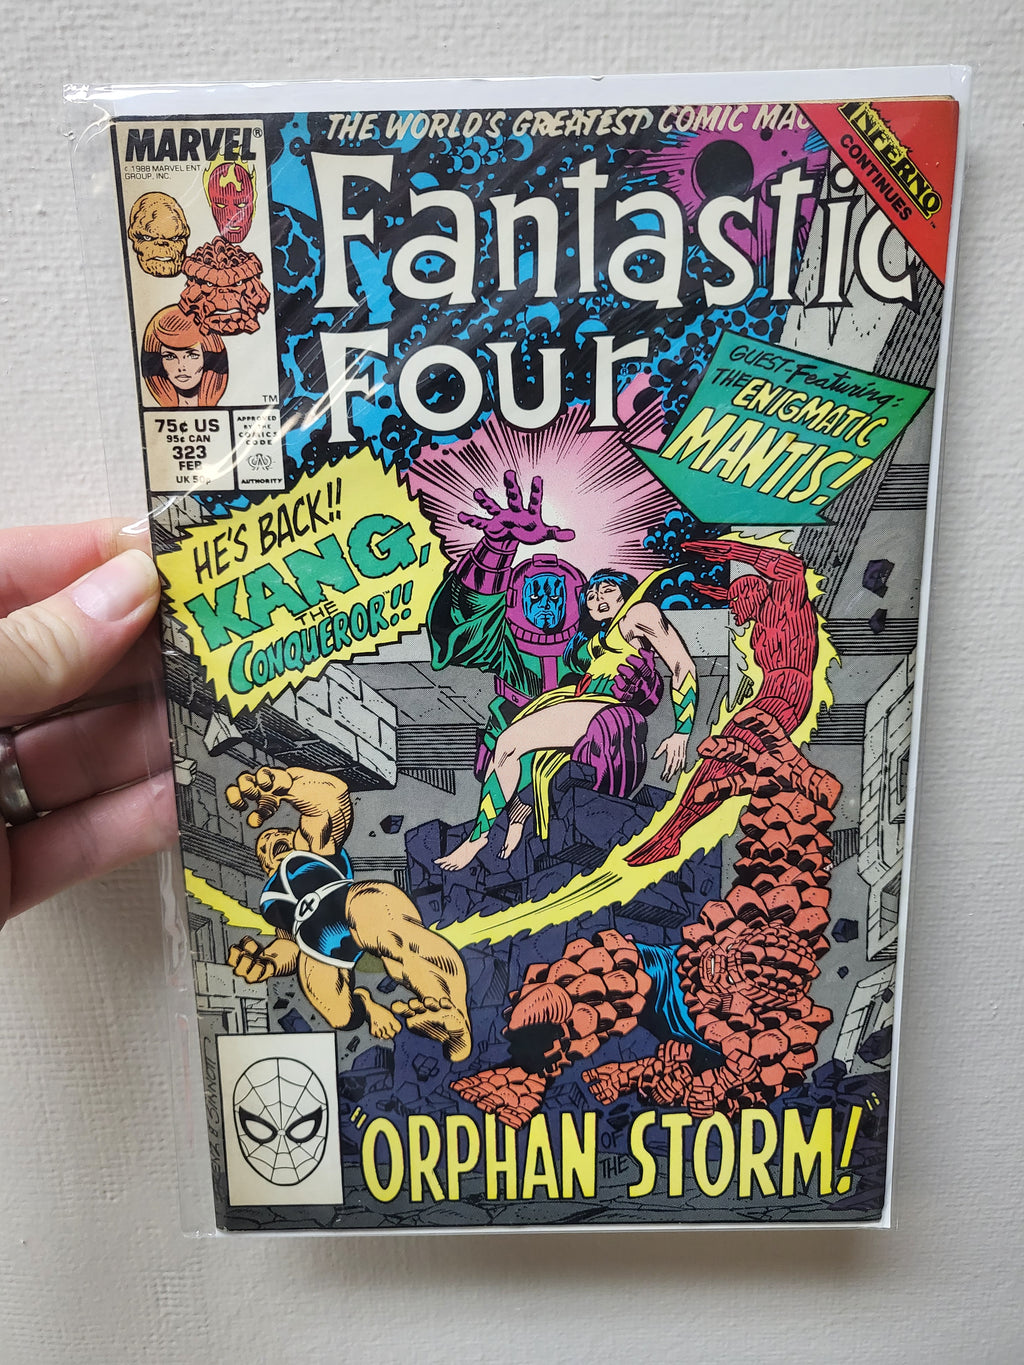 Fantastic Four #323 (1989) Kang & Mantis Appearances - Marvel Comics F/VF